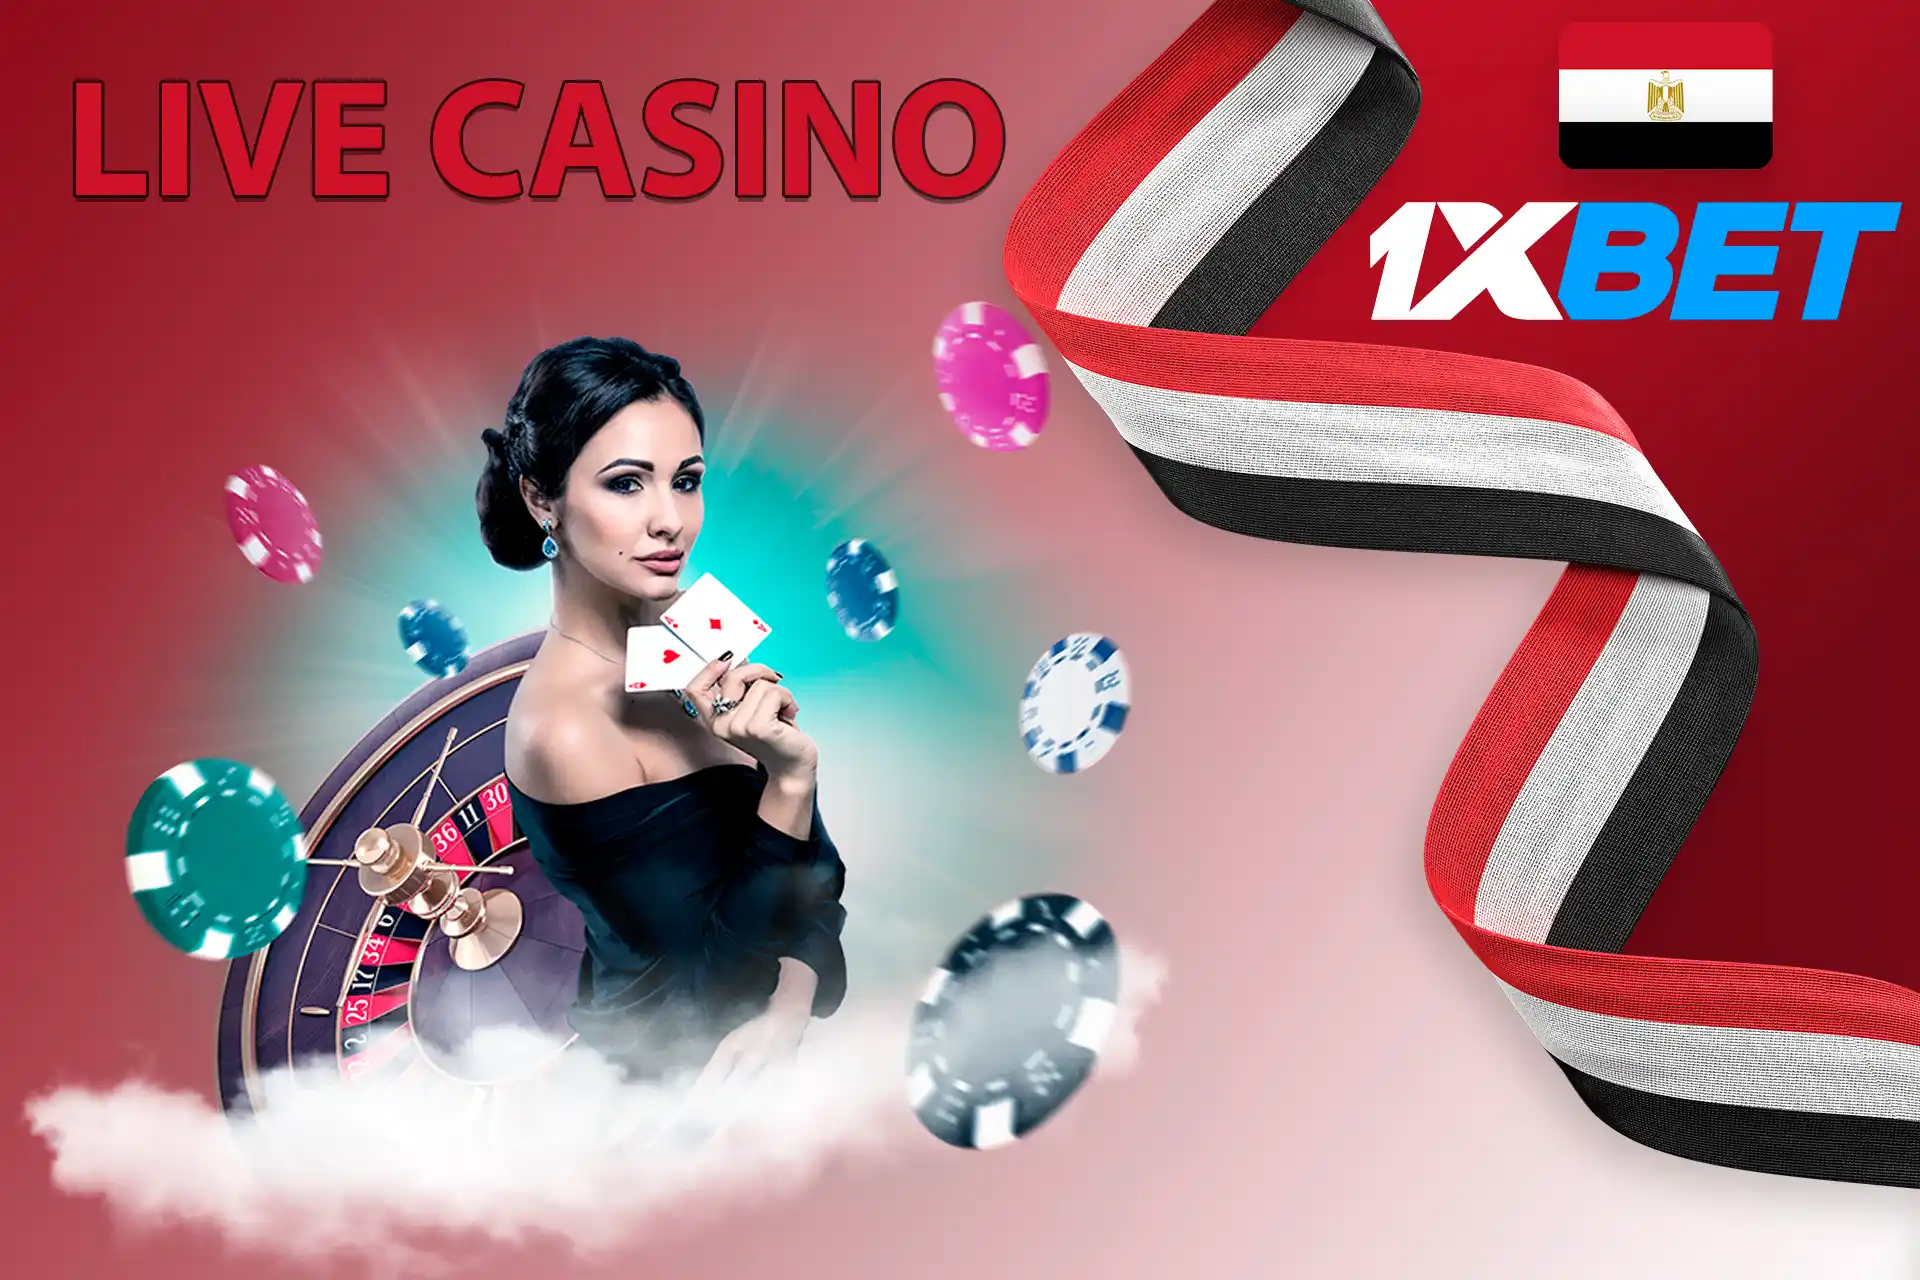 Live casino gambling at 1xBet